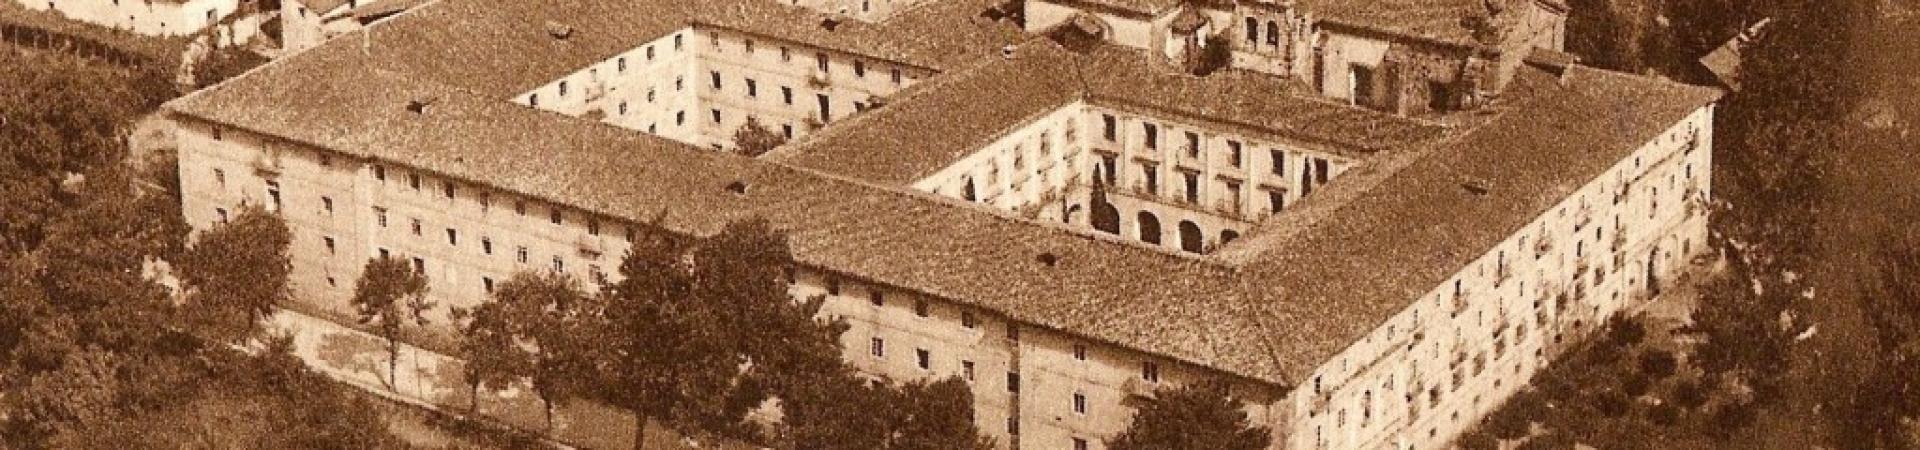 1930.-monasterio-de-corias.-1024x640.jpg